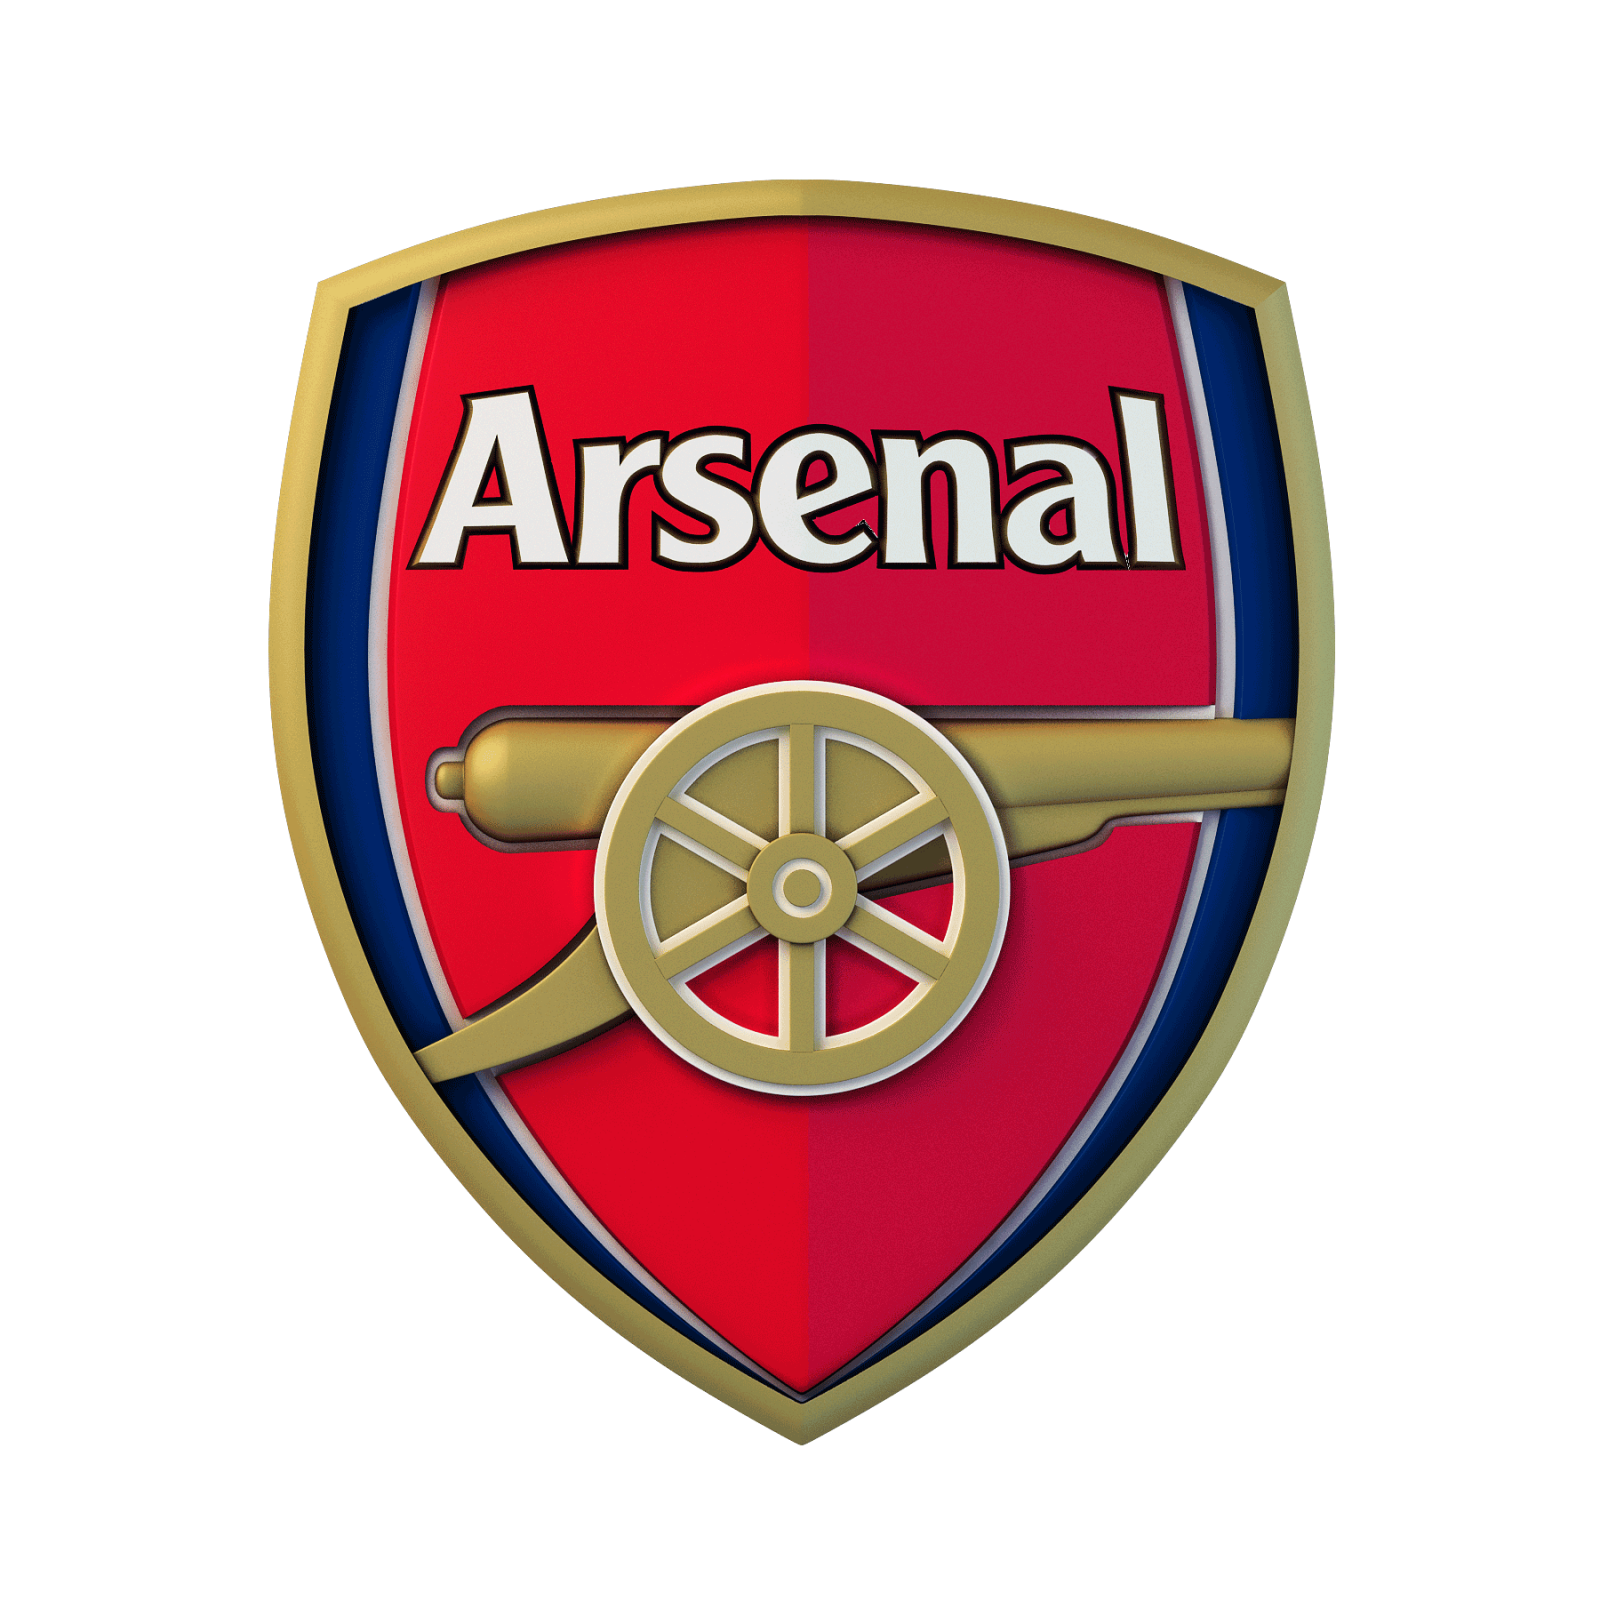 Arsenal-Abzeichen transparent PNG